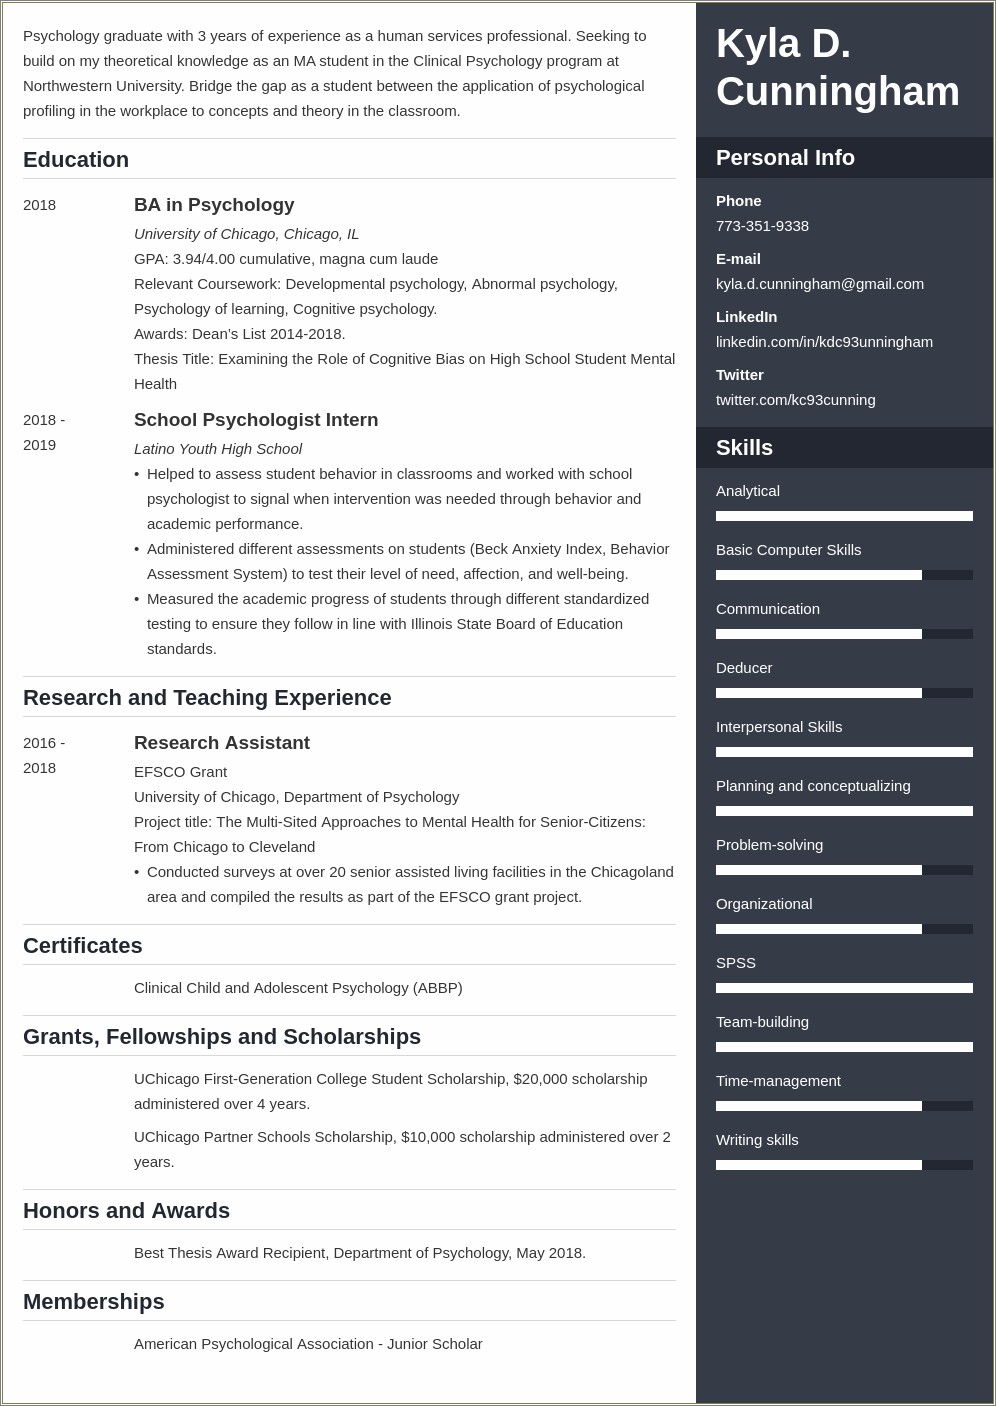 Sample Objective For Graduate School Resume